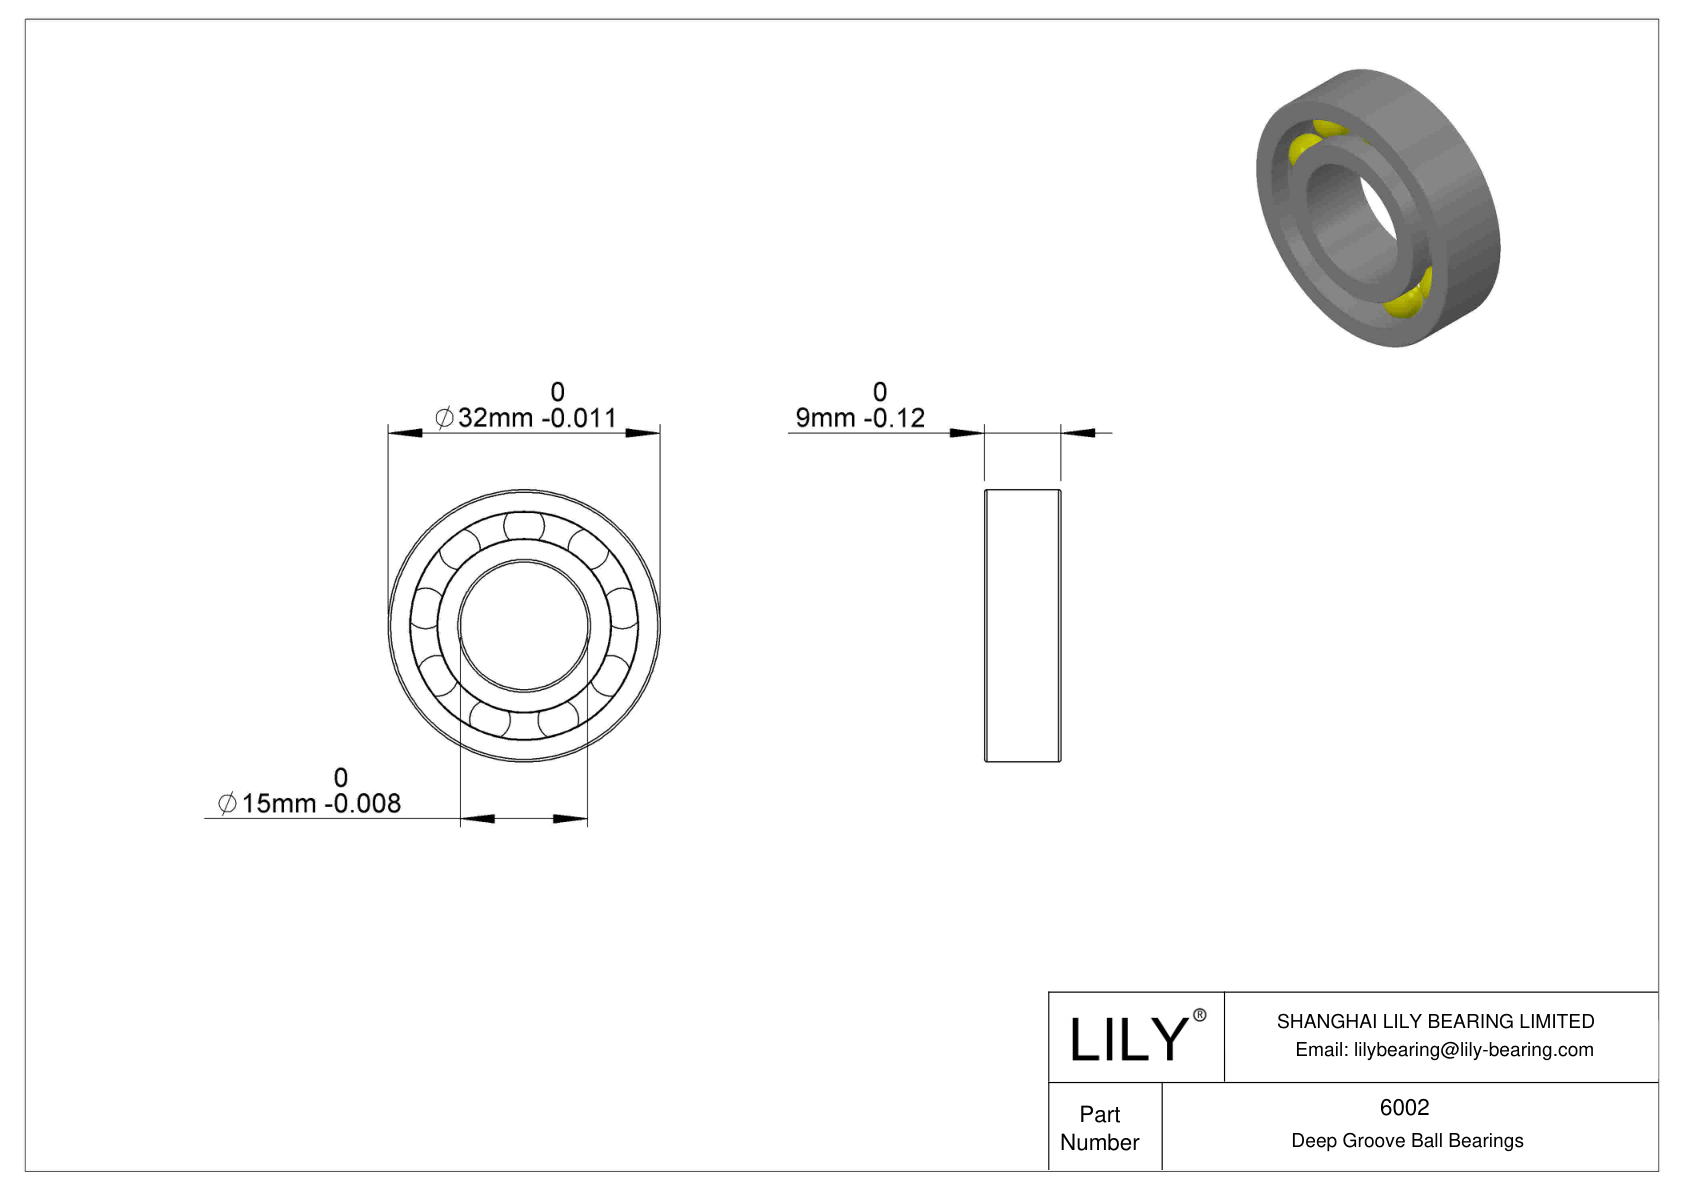 LILY-PU600240-12 Polyurethane Coated Bearing cad drawing